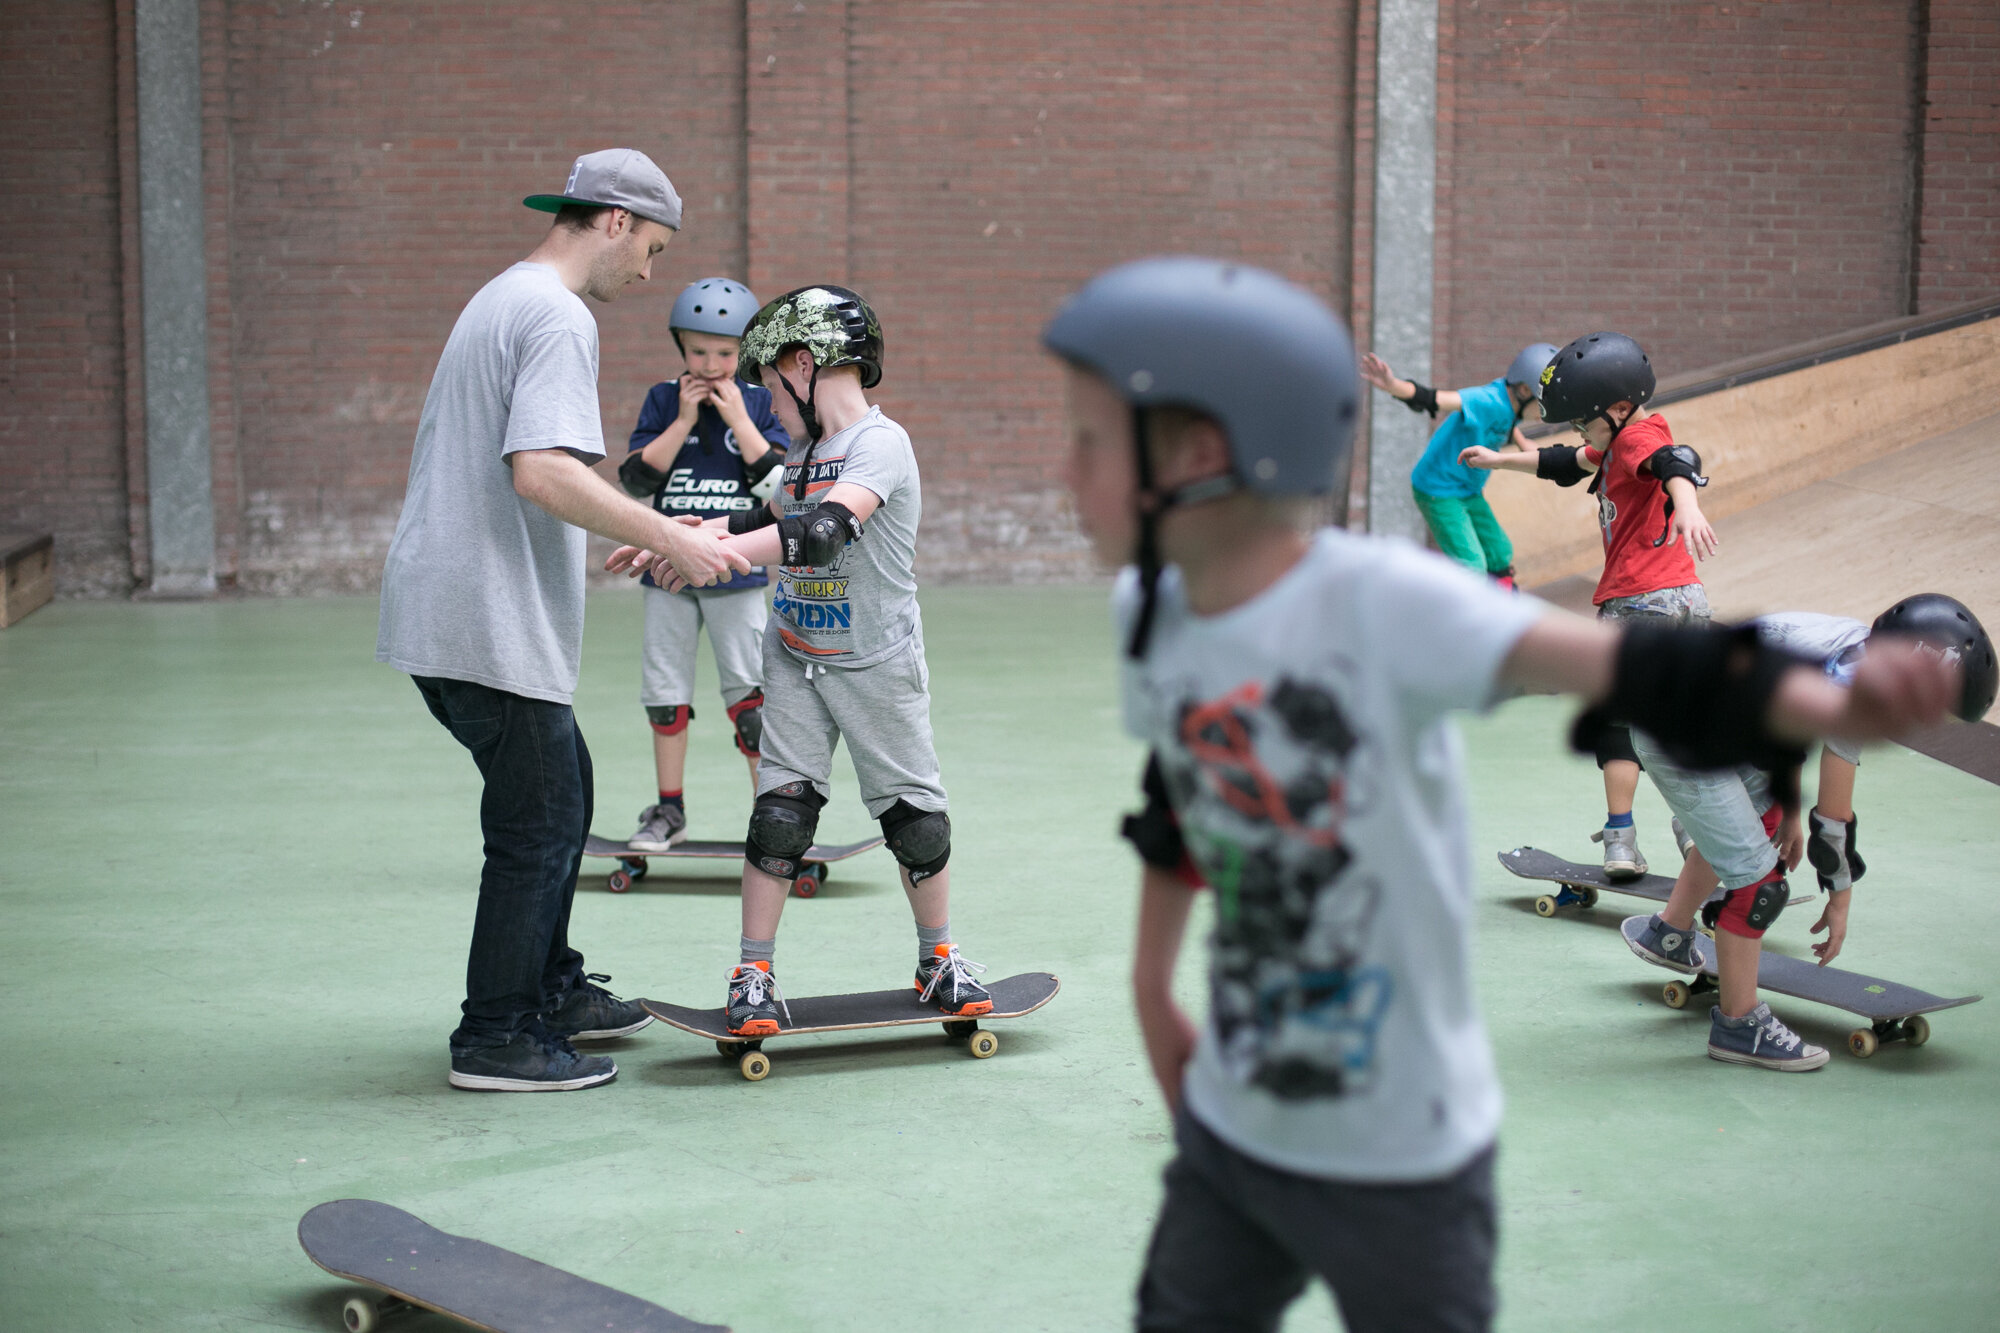 Skateboardworkshop Kinderfeestje 2014 den Haag Sweatshop .jpg